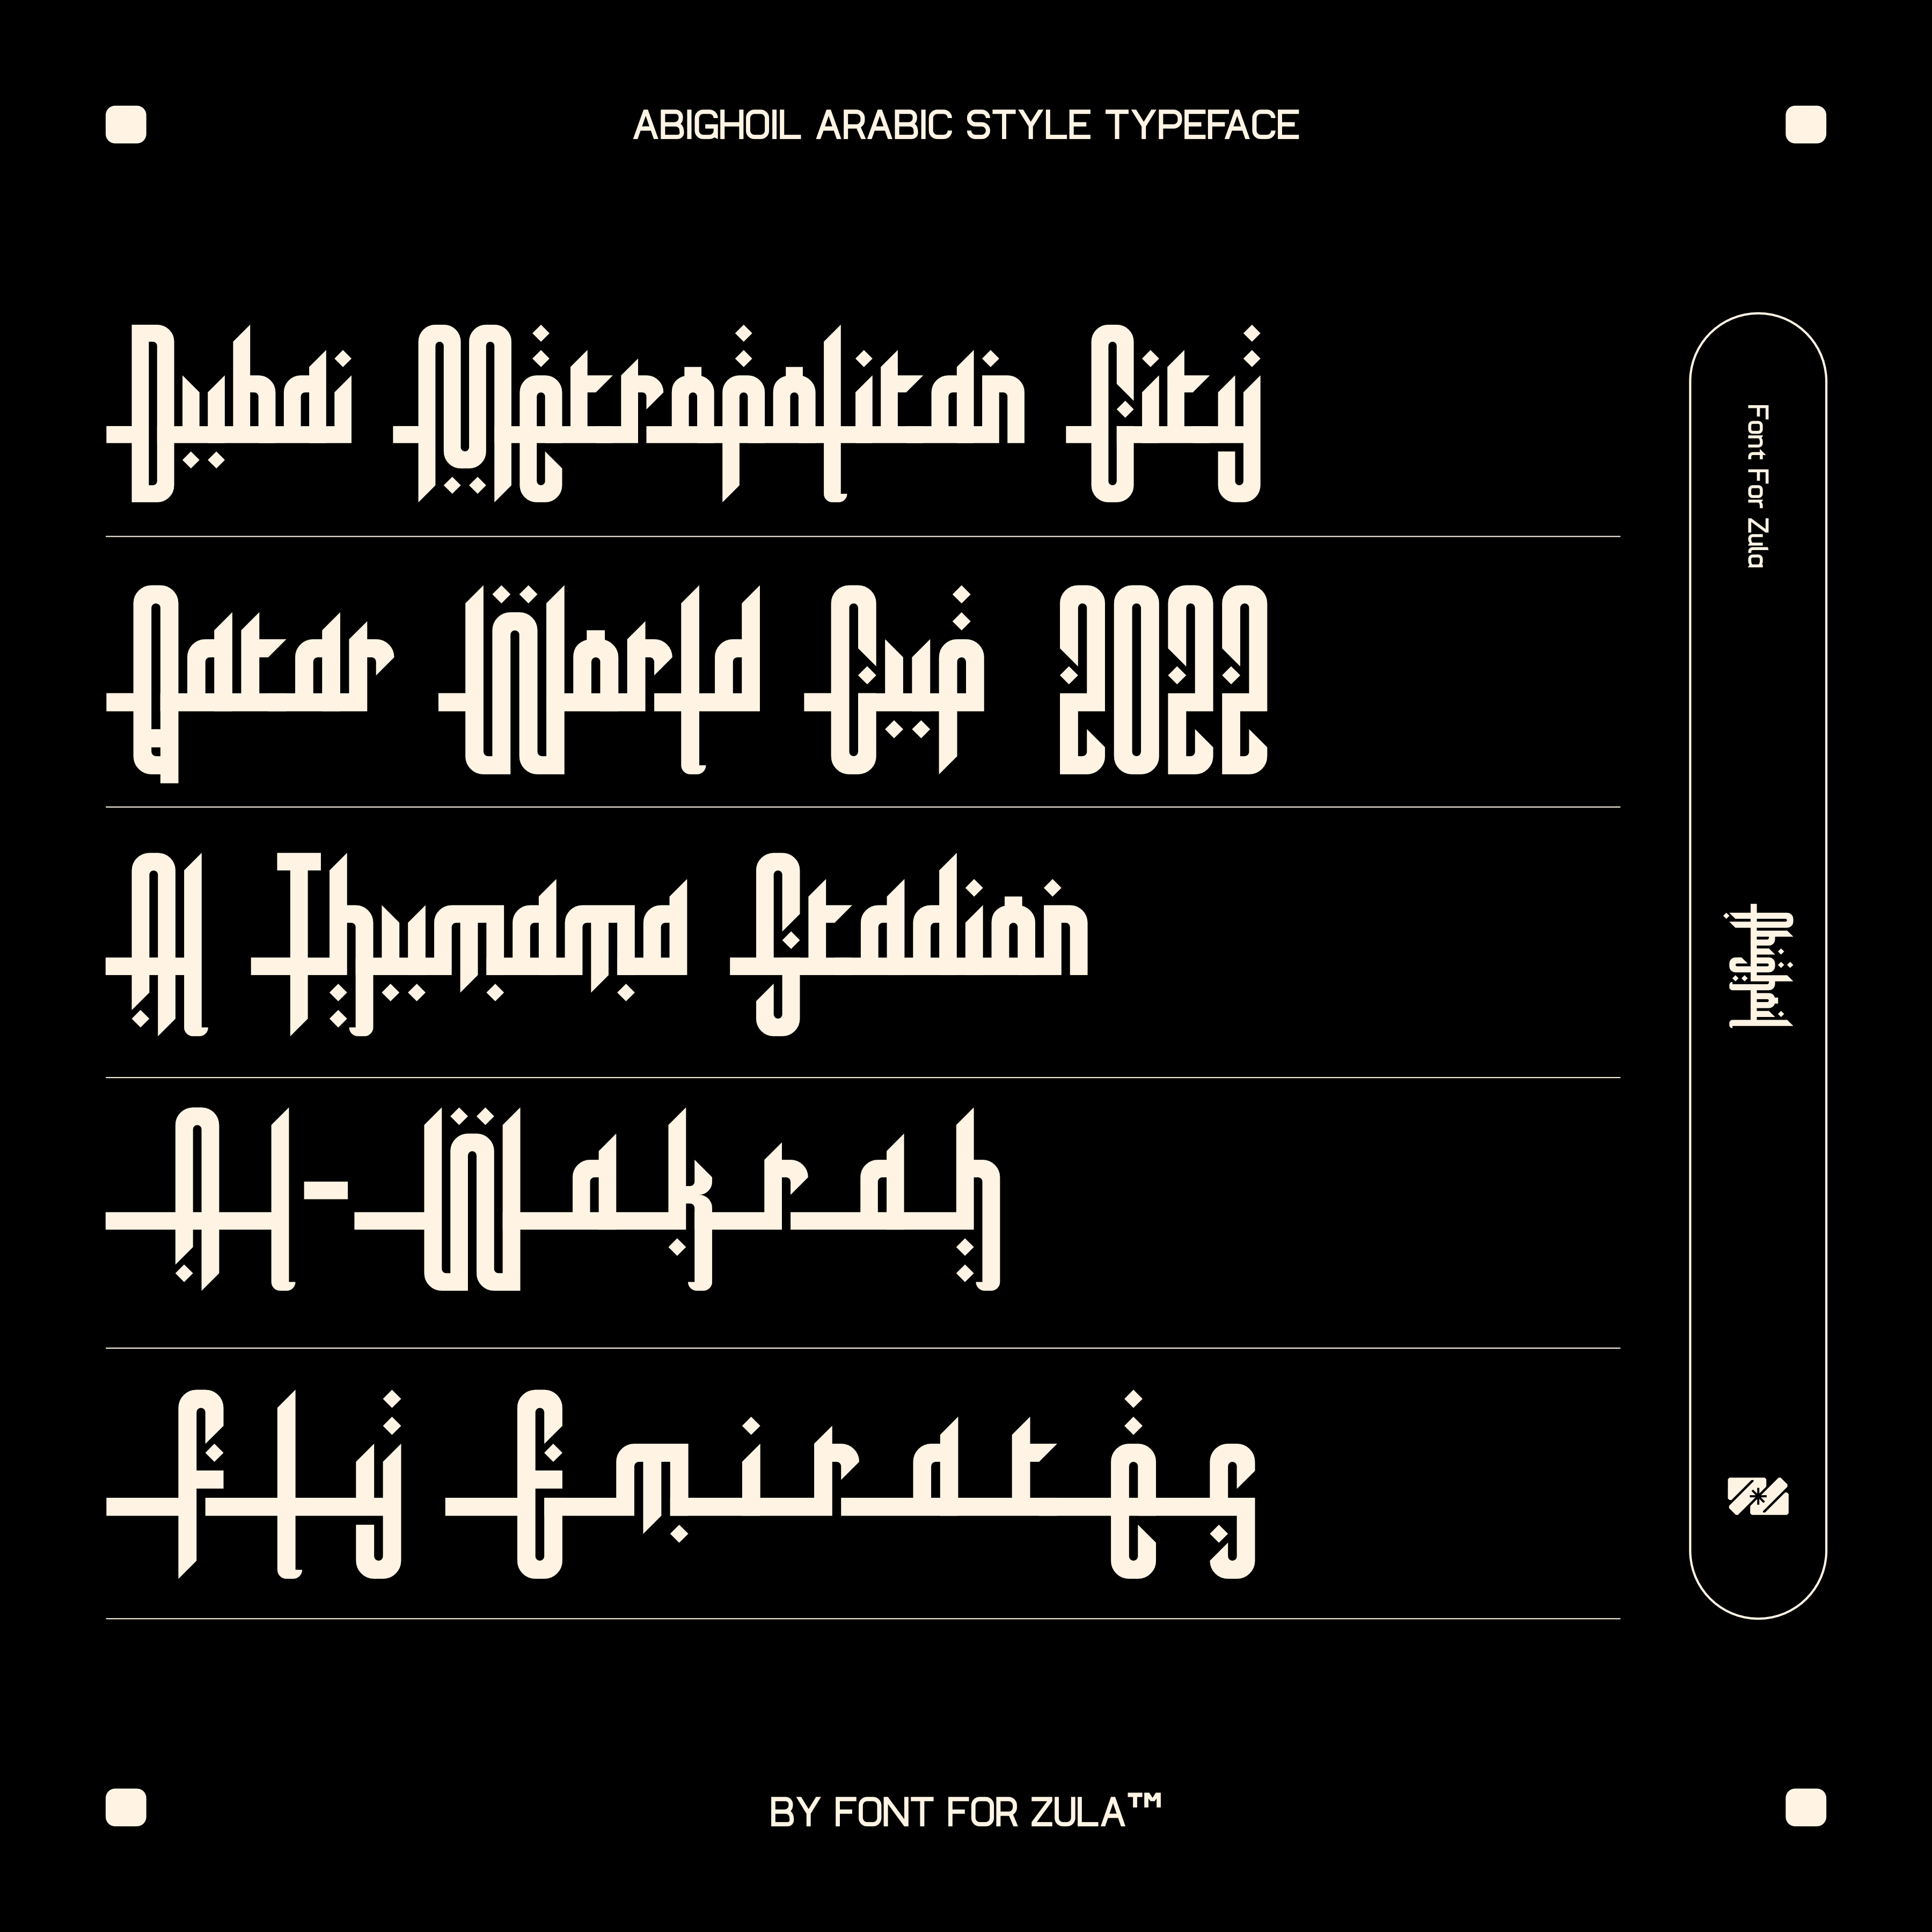 ABIGHOIL Typeface